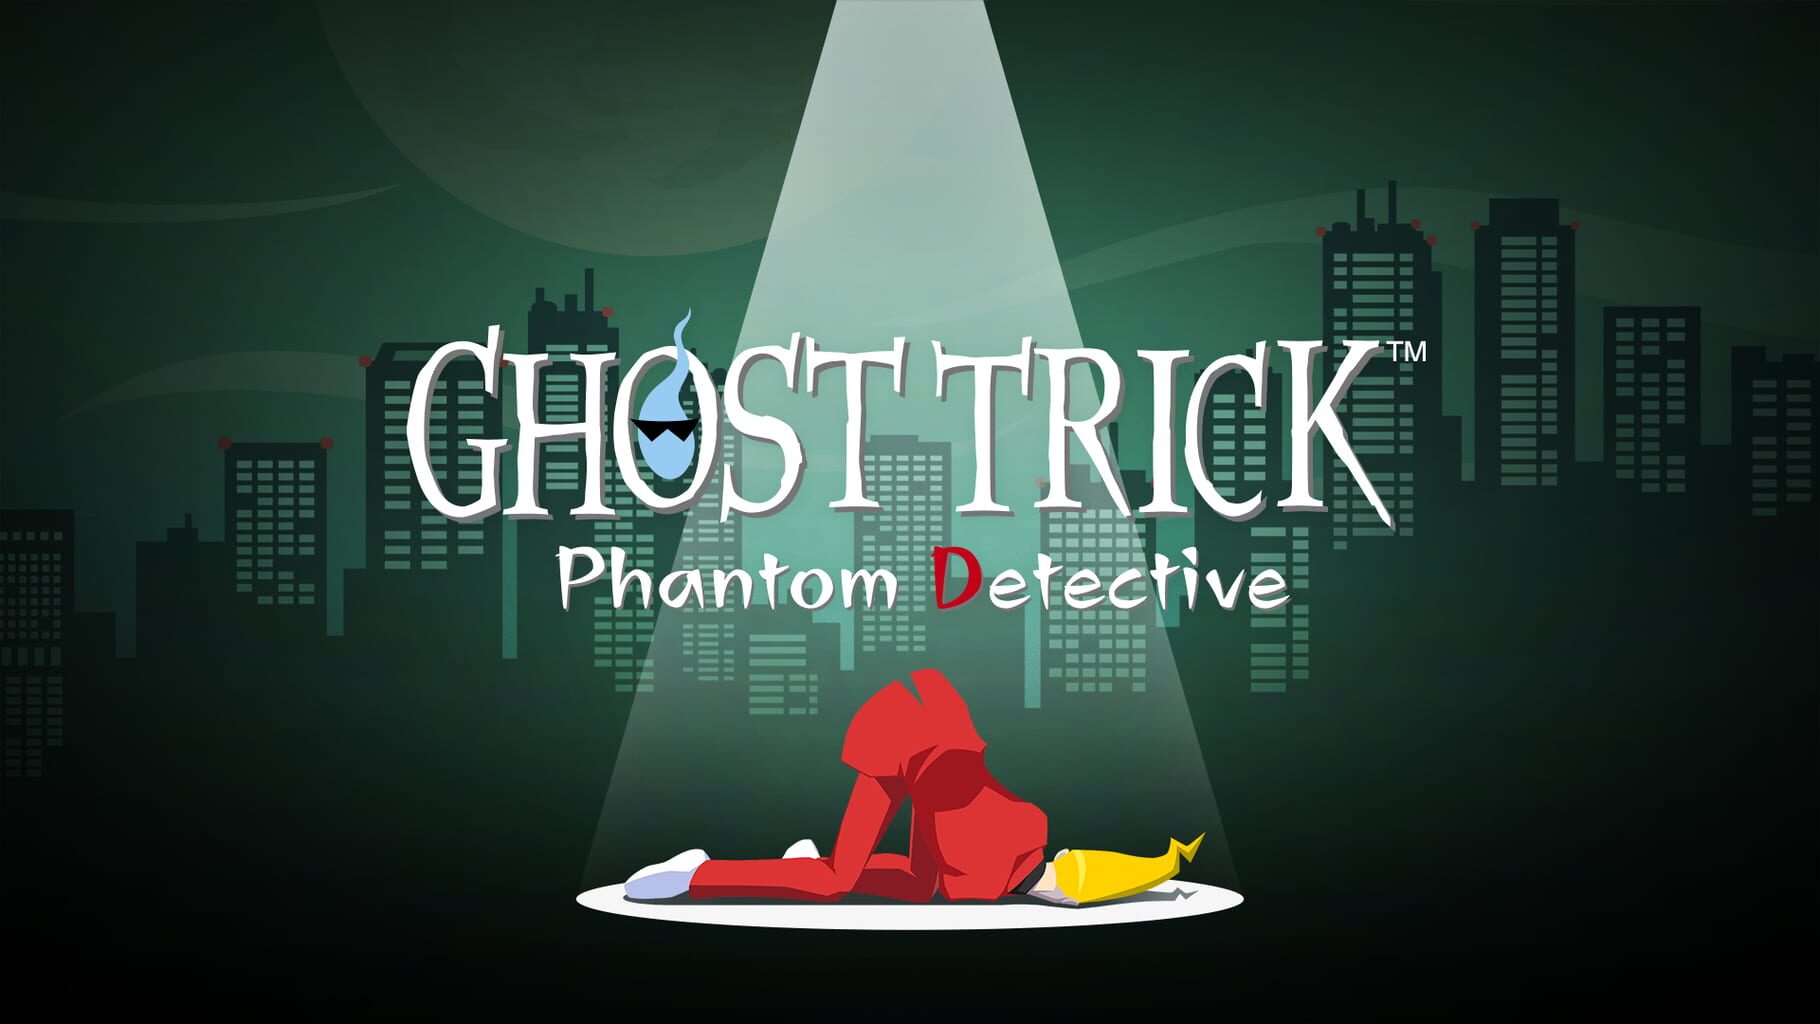 Artwork for Ghost Trick: Phantom Detective